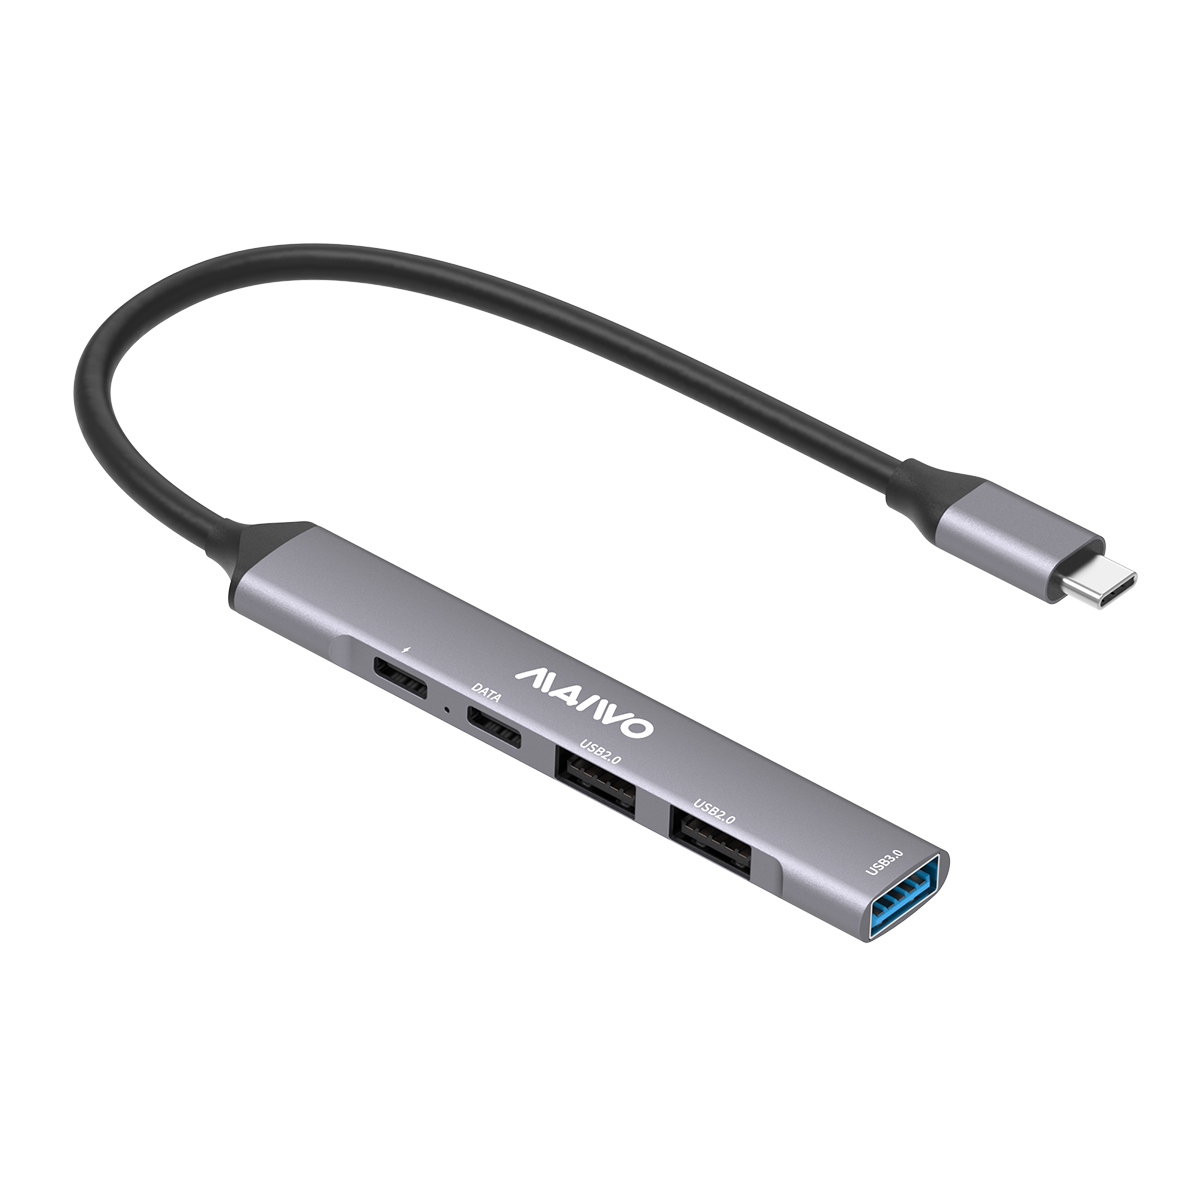 MAIWO KH05 5-Port USB-C Hub with 100W PD Power and Type-C/USB3.0/USB2.0, Ultra-Slim USB 3.0 Splitter